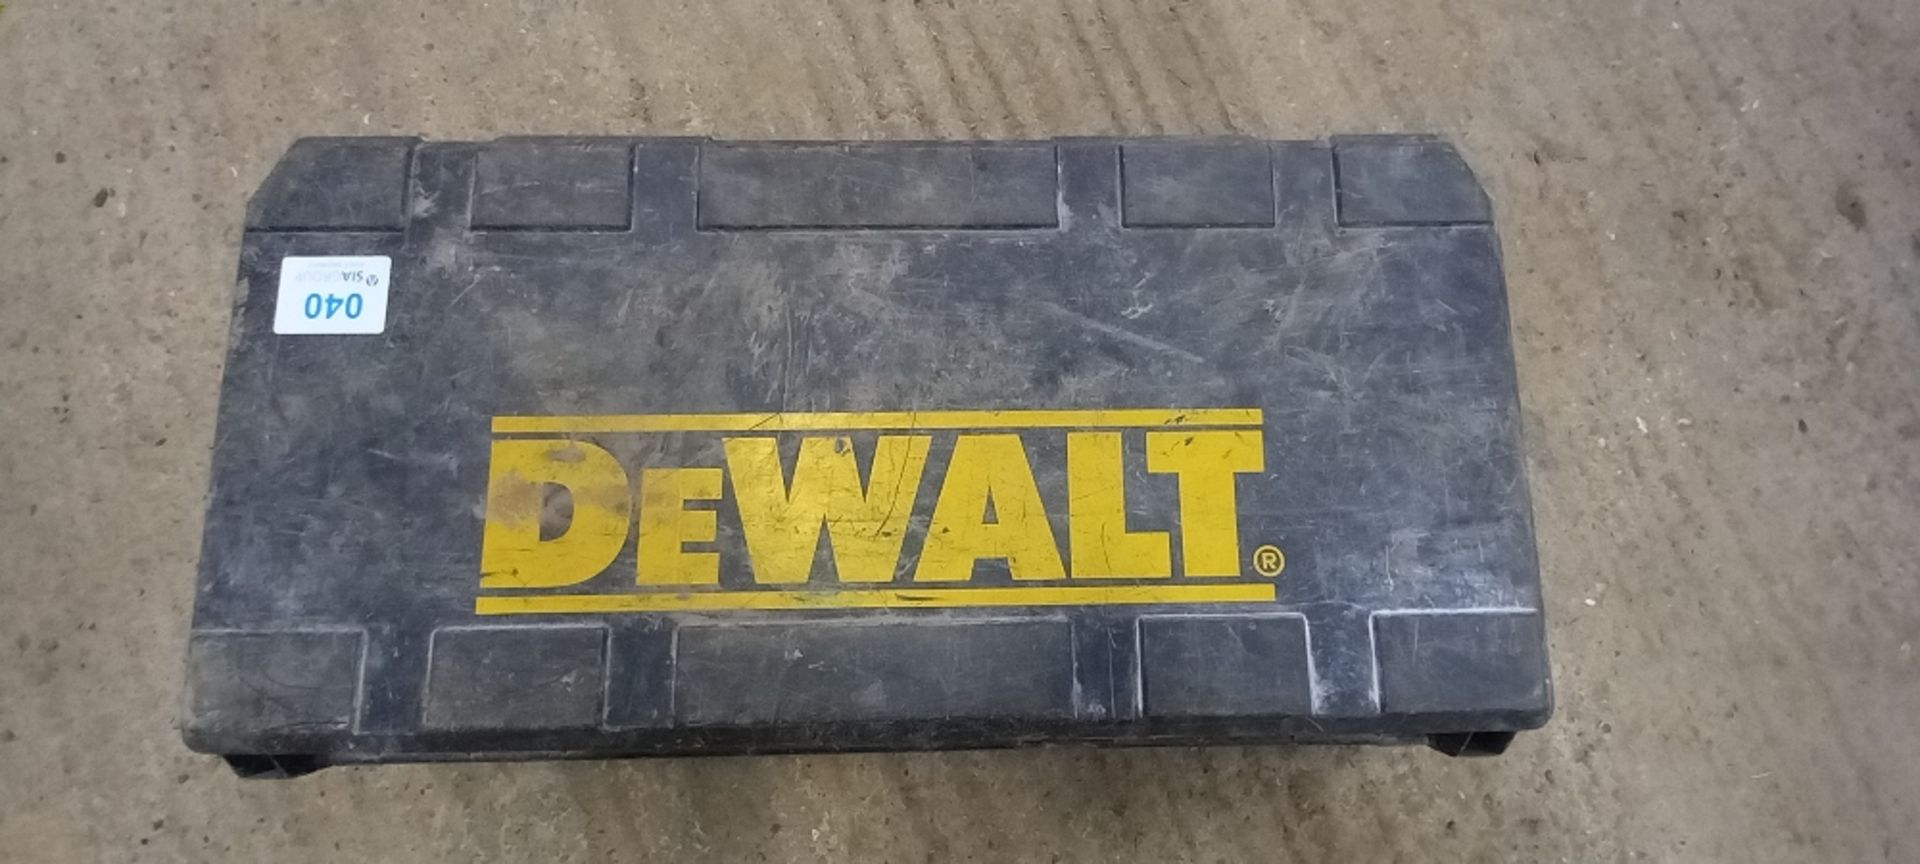 DeWalt 25899 Professional Concrete Breaker - Image 5 of 5